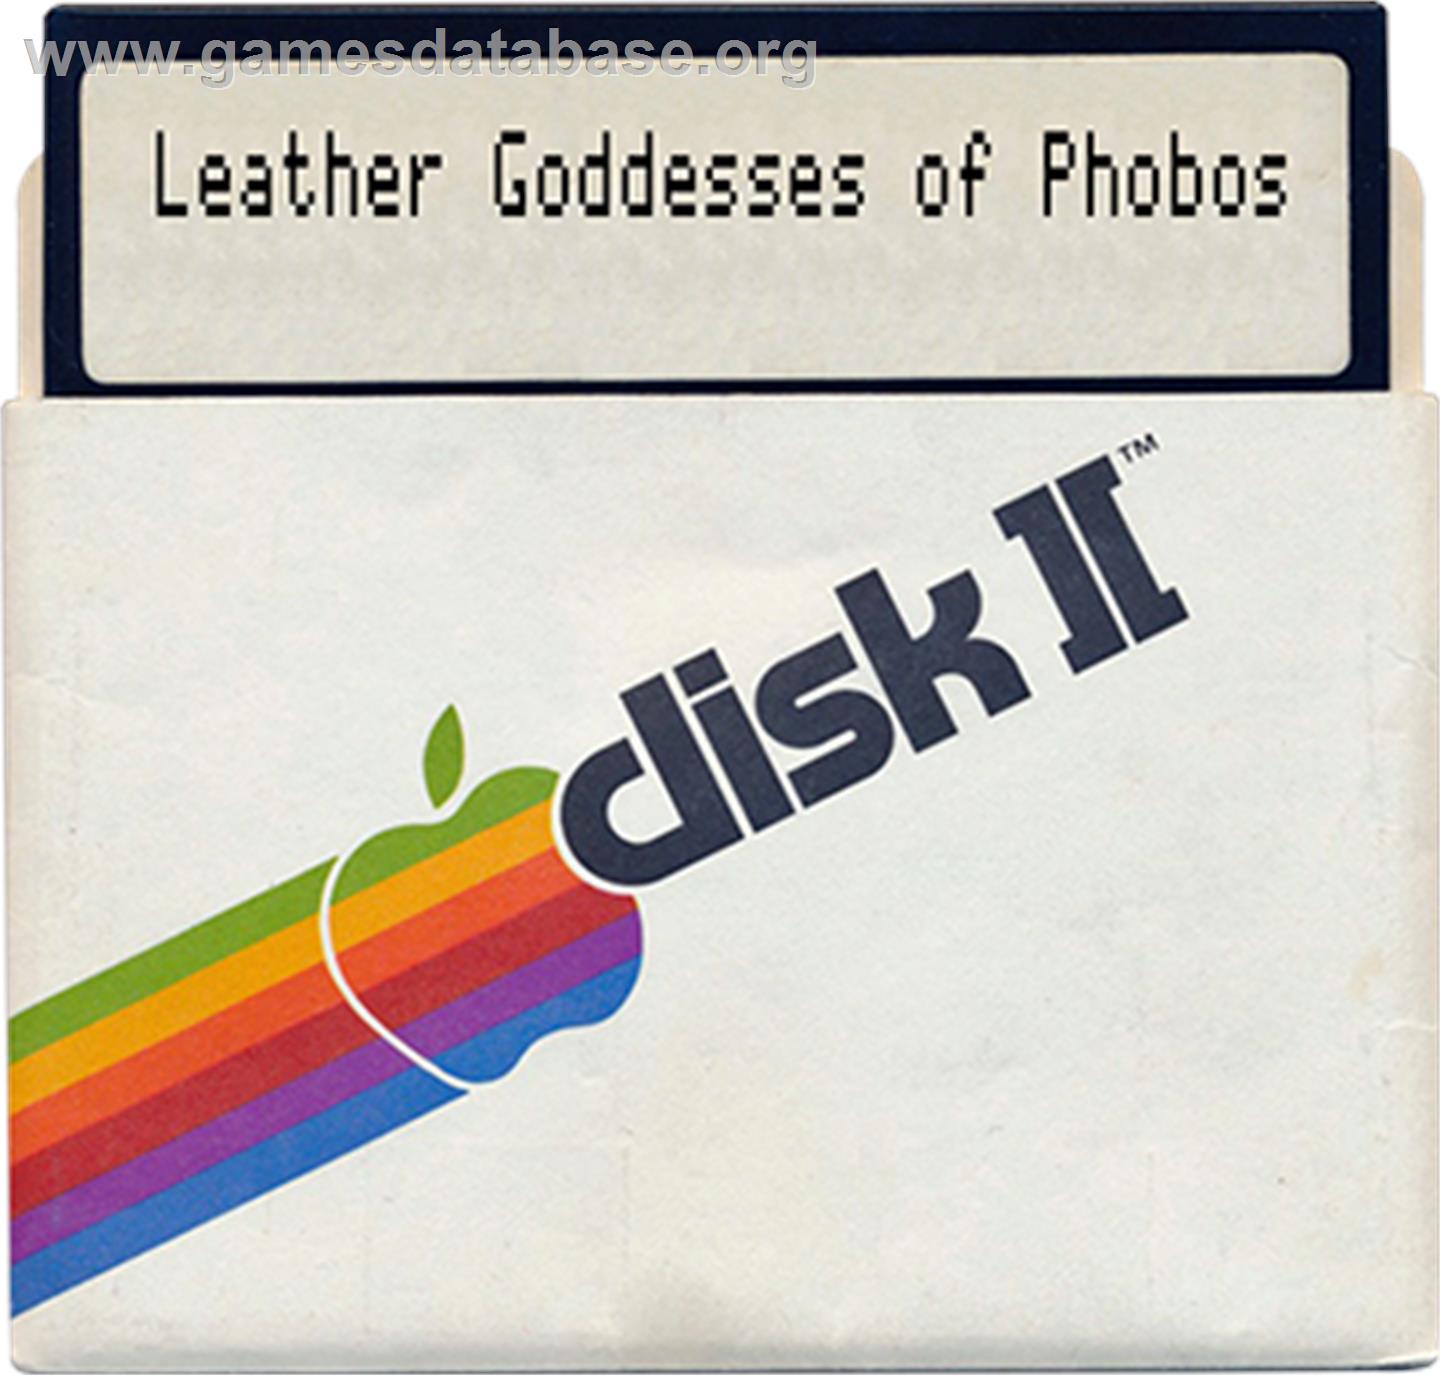 Leather Goddesses of Phobos - Apple II - Artwork - Disc